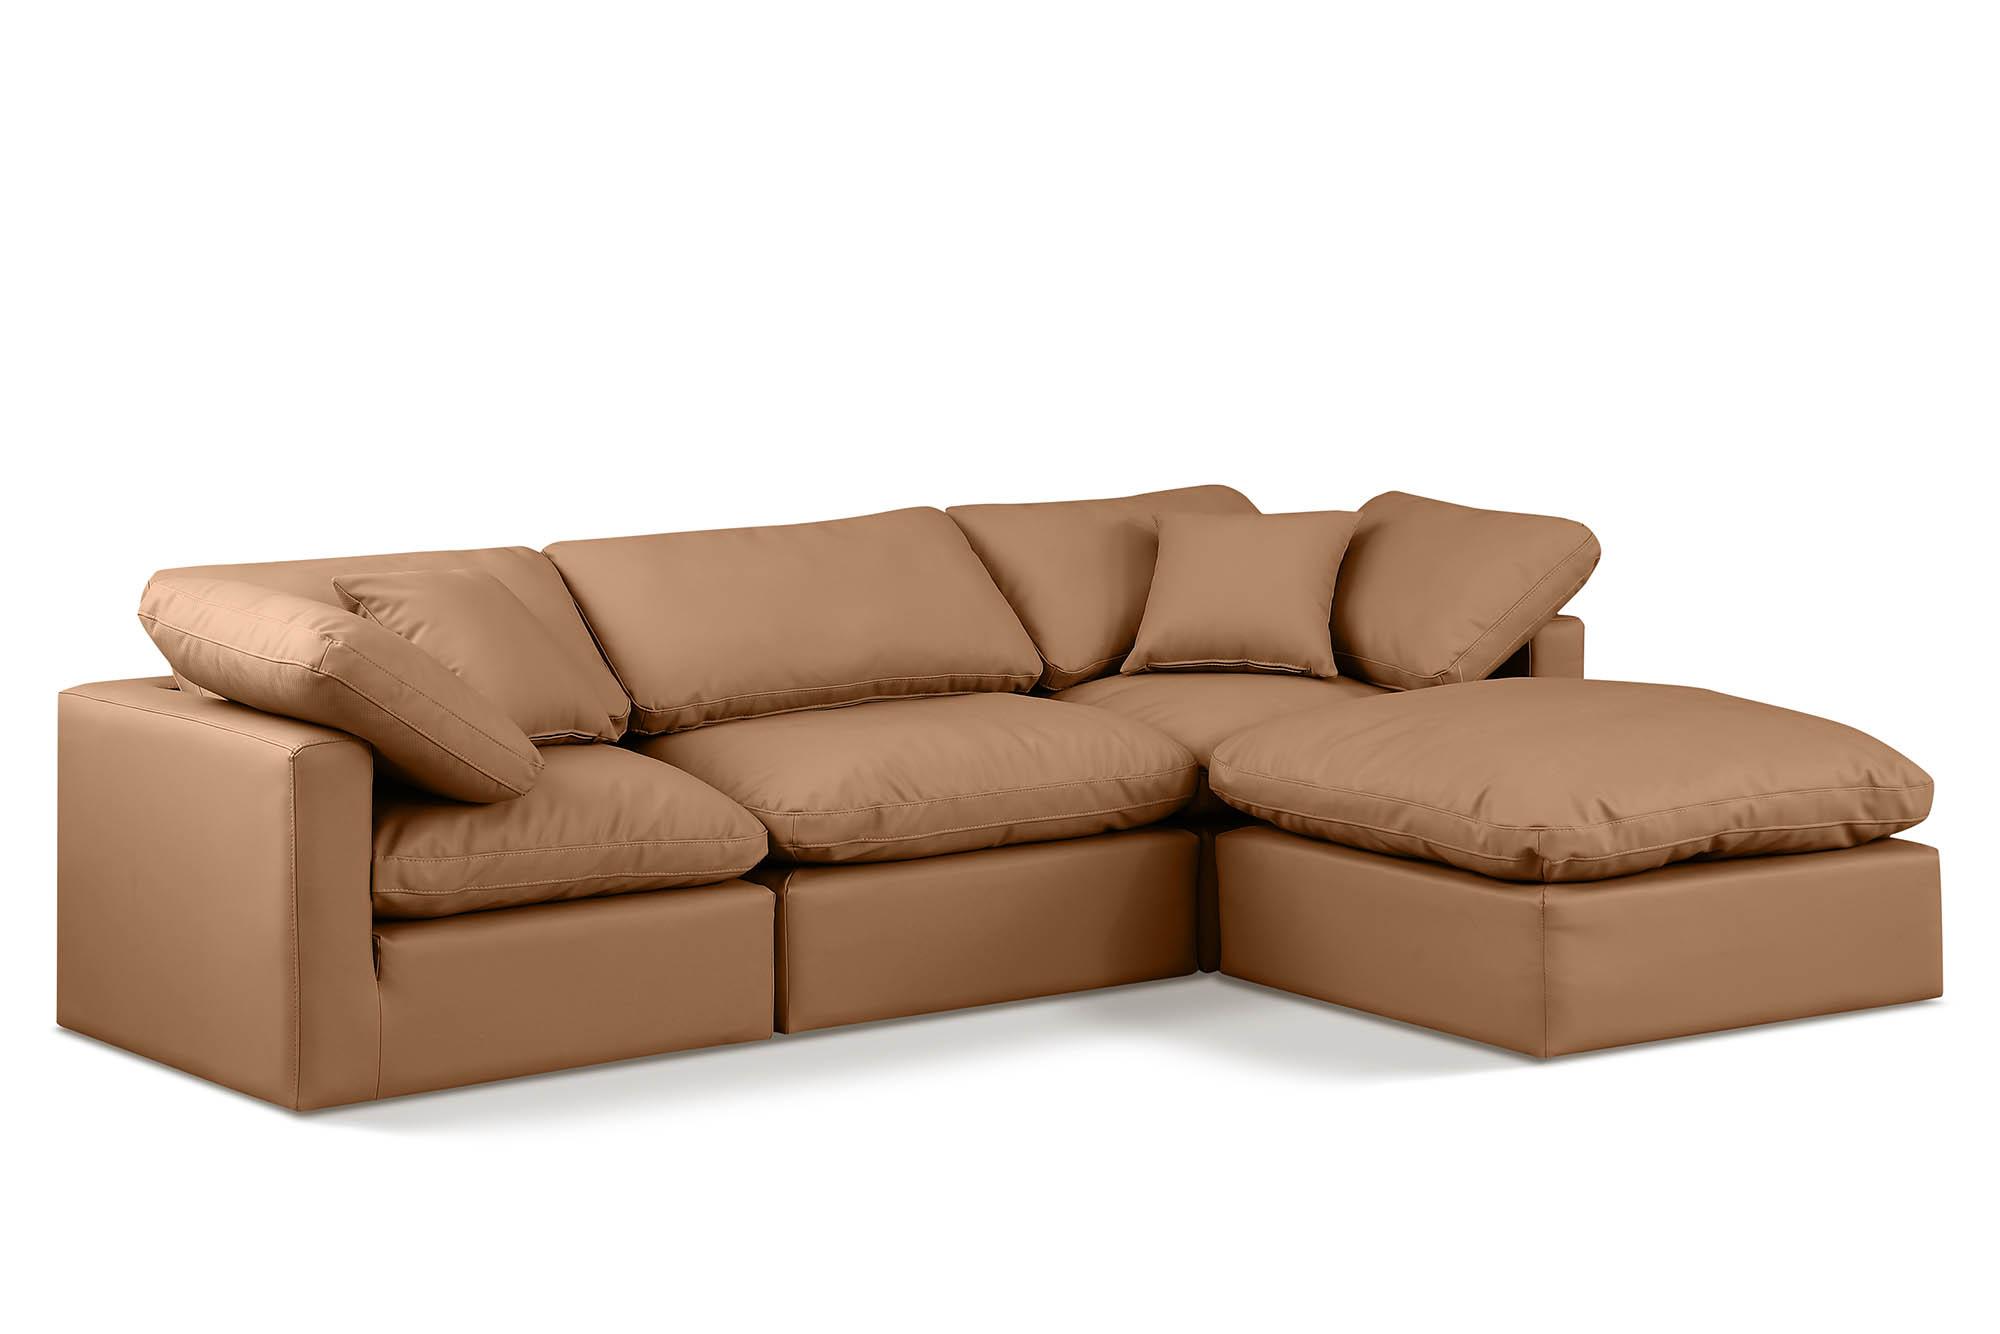 Contemporary, Modern Modular Sectional Sofa INDULGE 146Cognac-Sec4A 146Cognac-Sec4A in Cognac Faux Leather